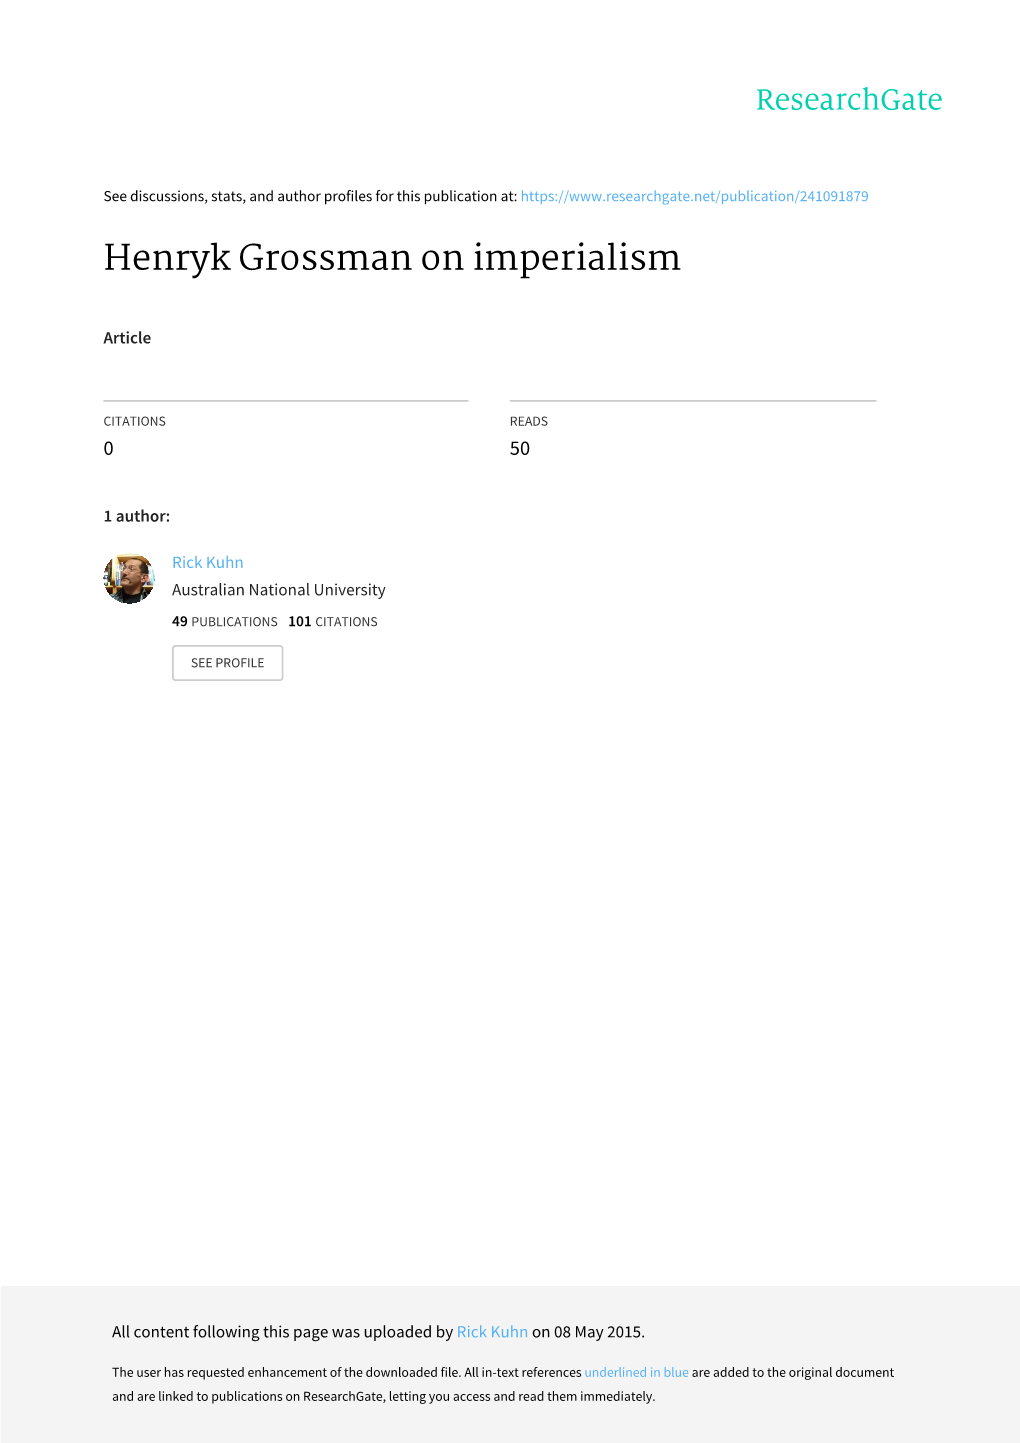 Henryk Grossman on Imperialism